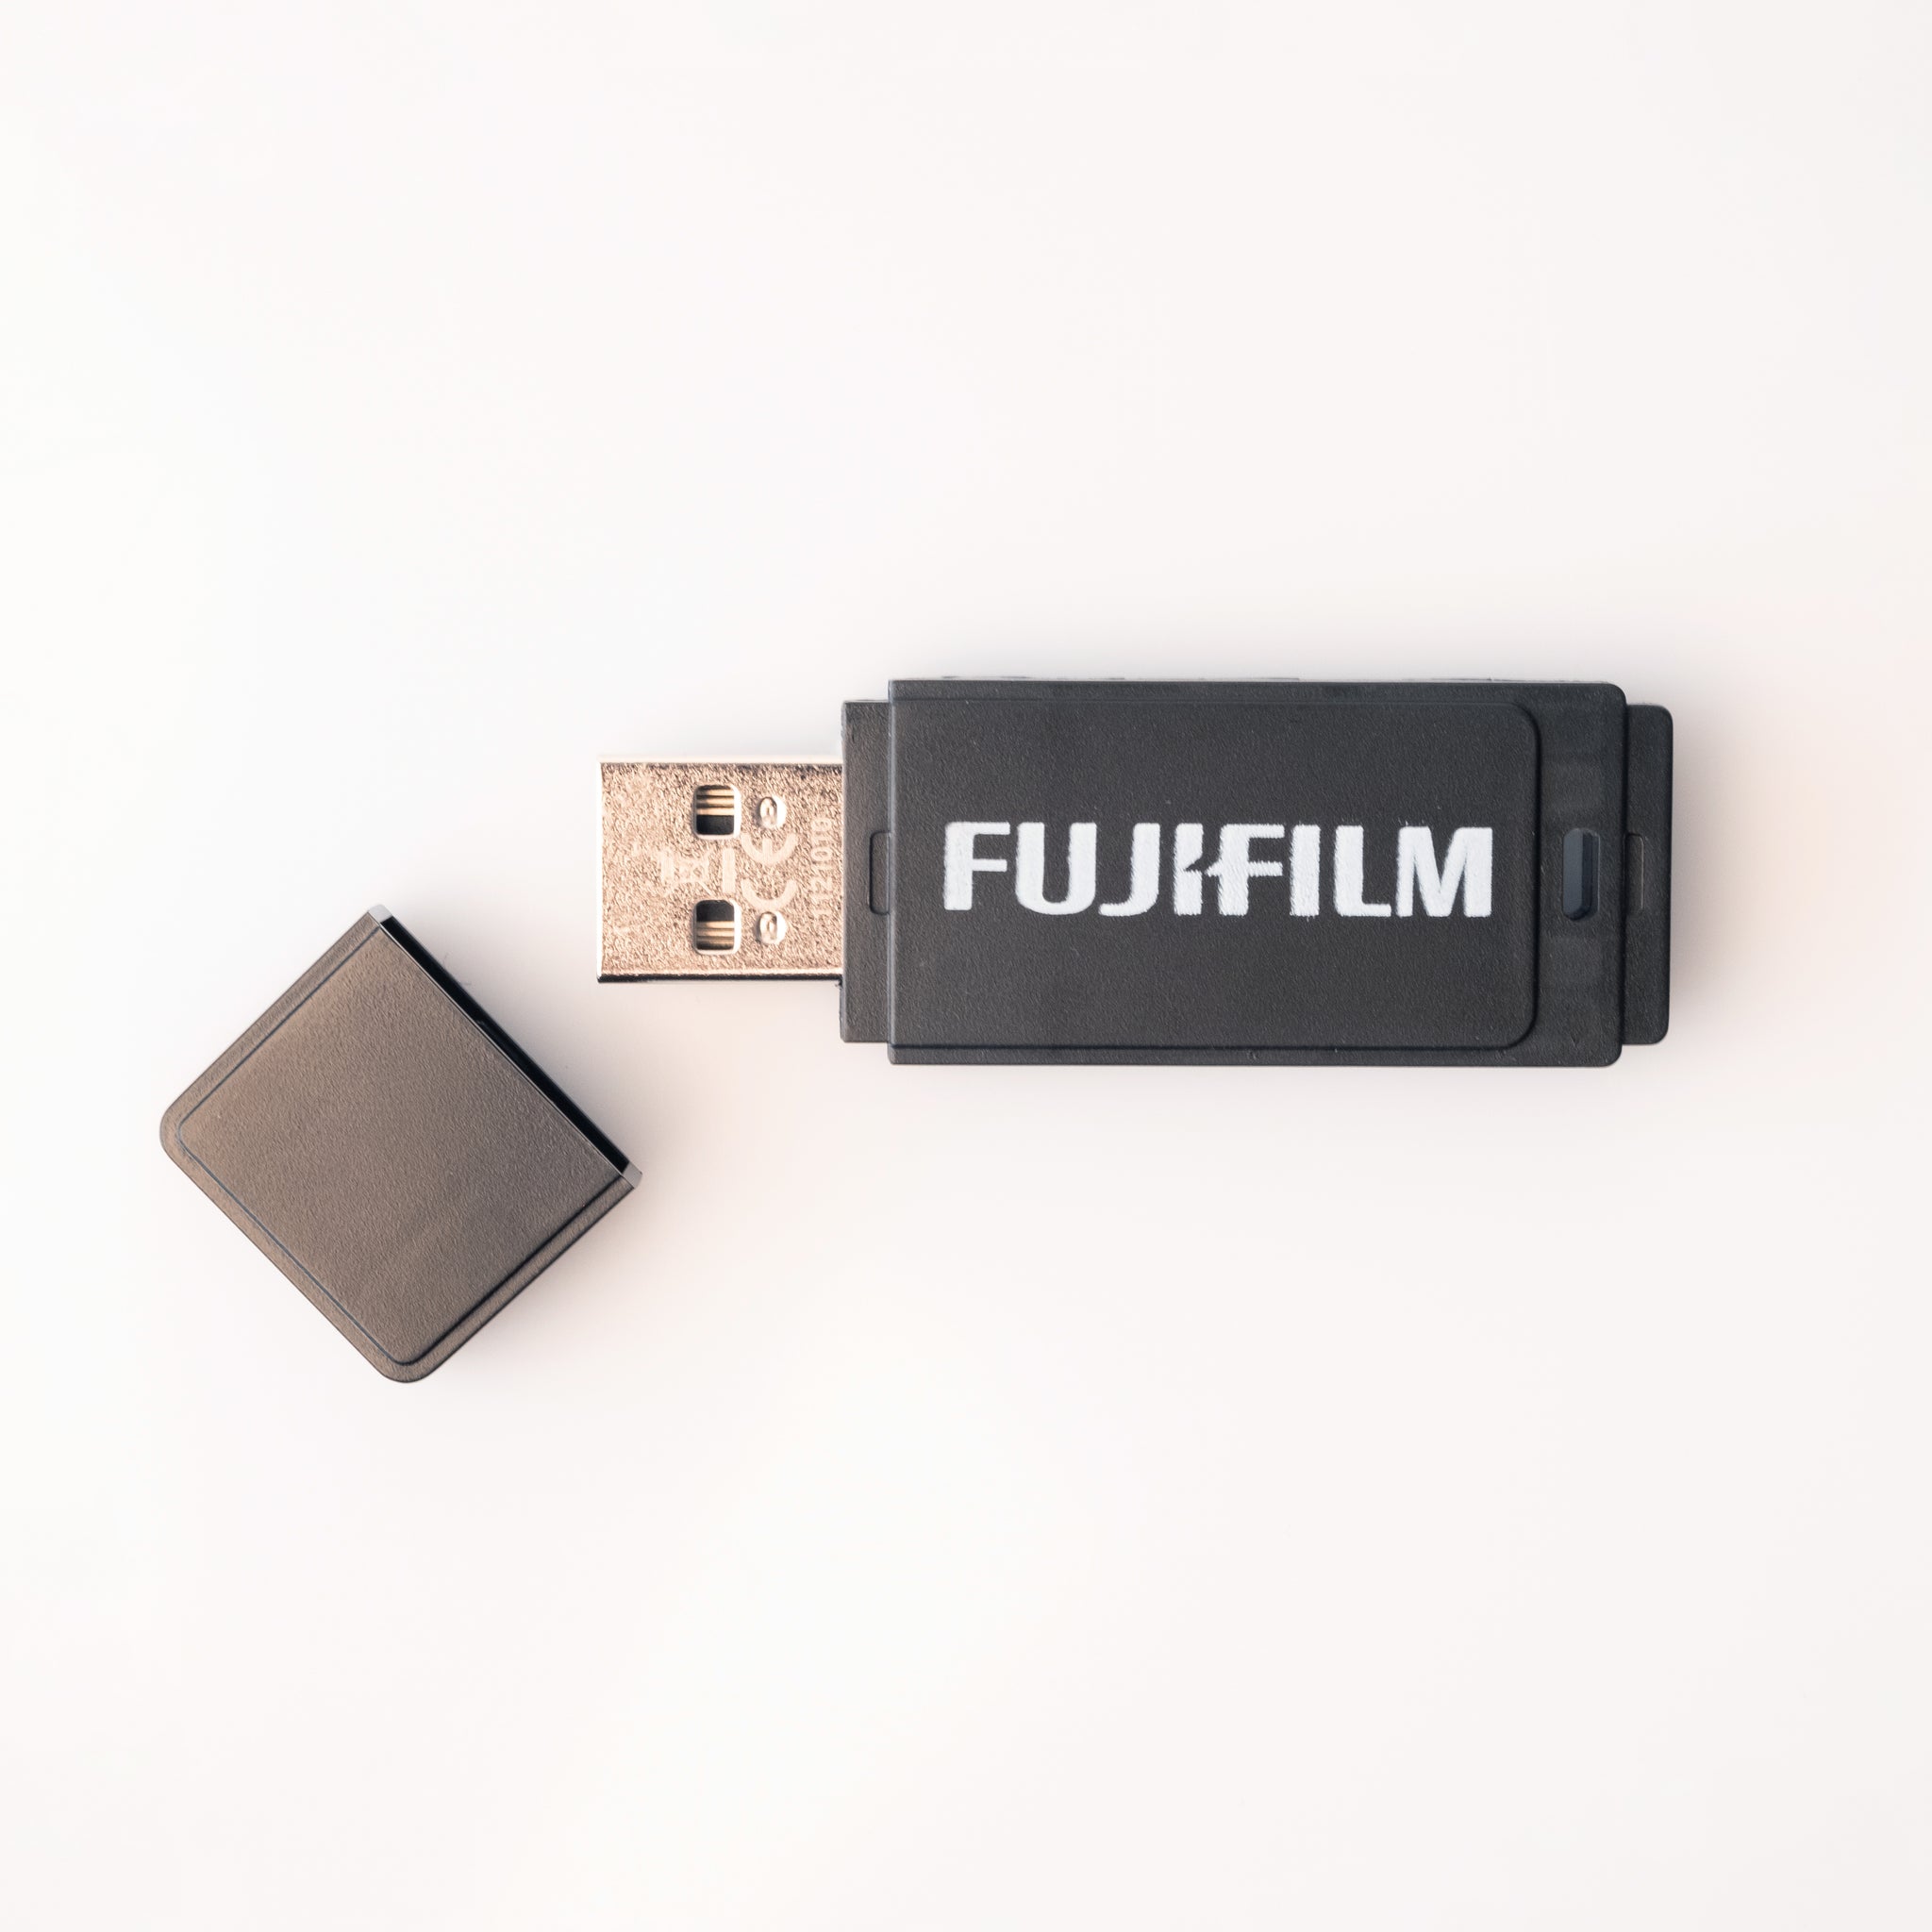 FUJIFILM USB 2.0 FLASH DRIVE 16GB